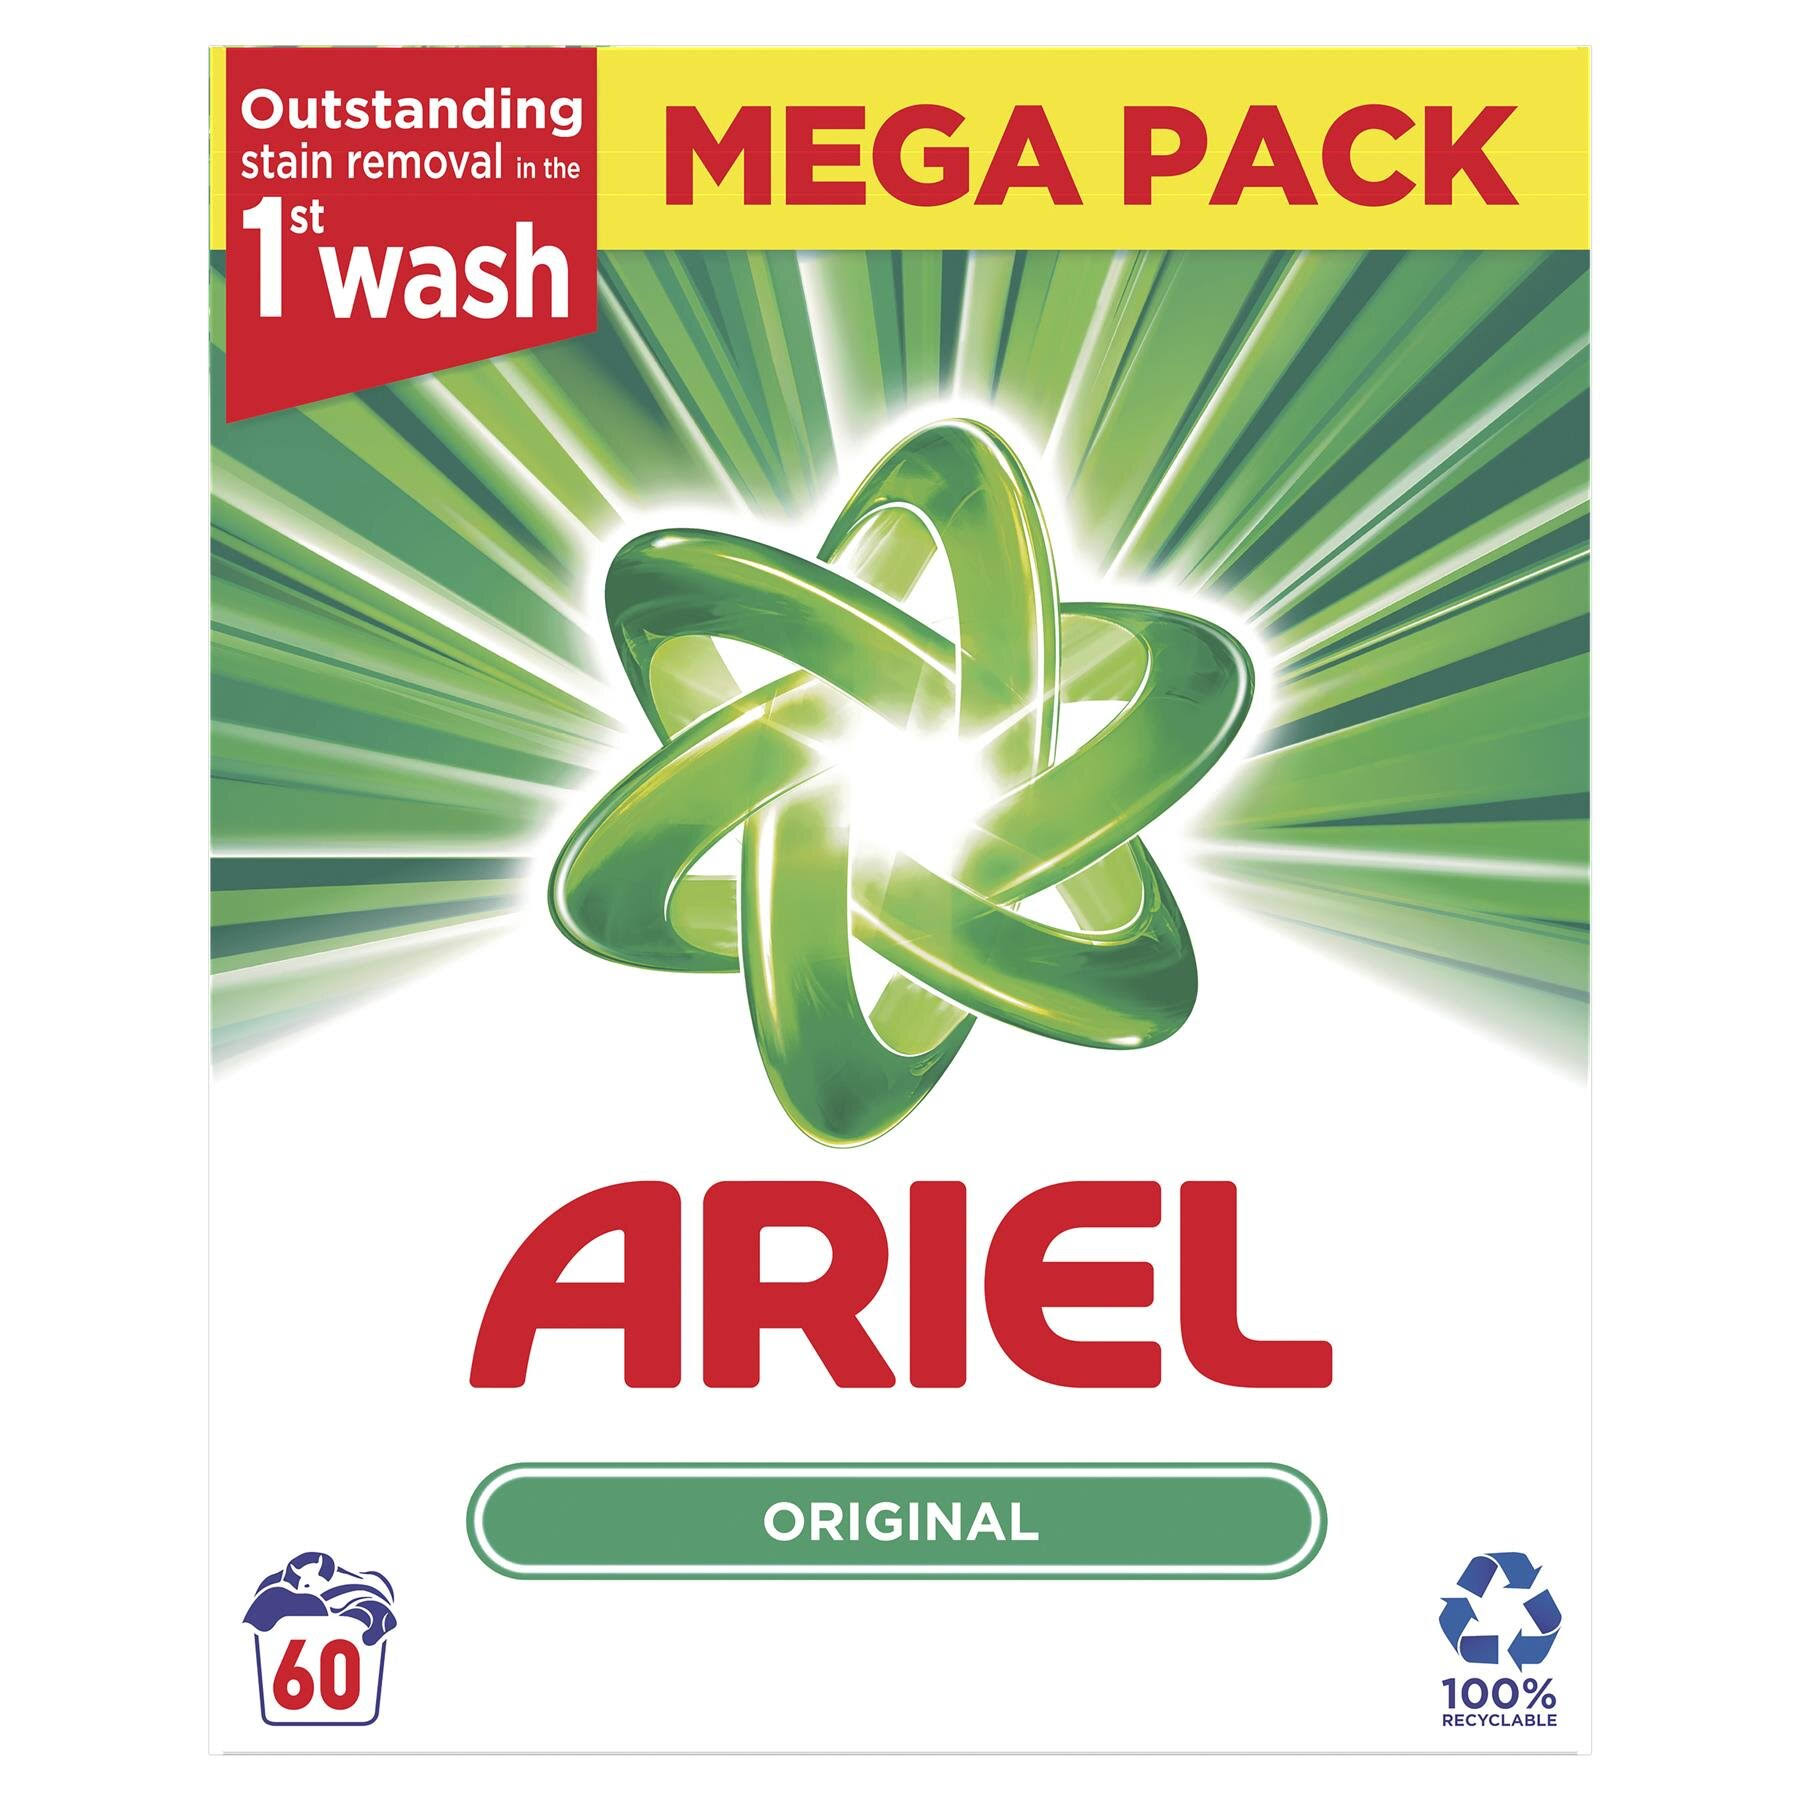 Ariel Original Washing Powder Stain Removal Laundry Detergent, Mega Pack 60 Wash